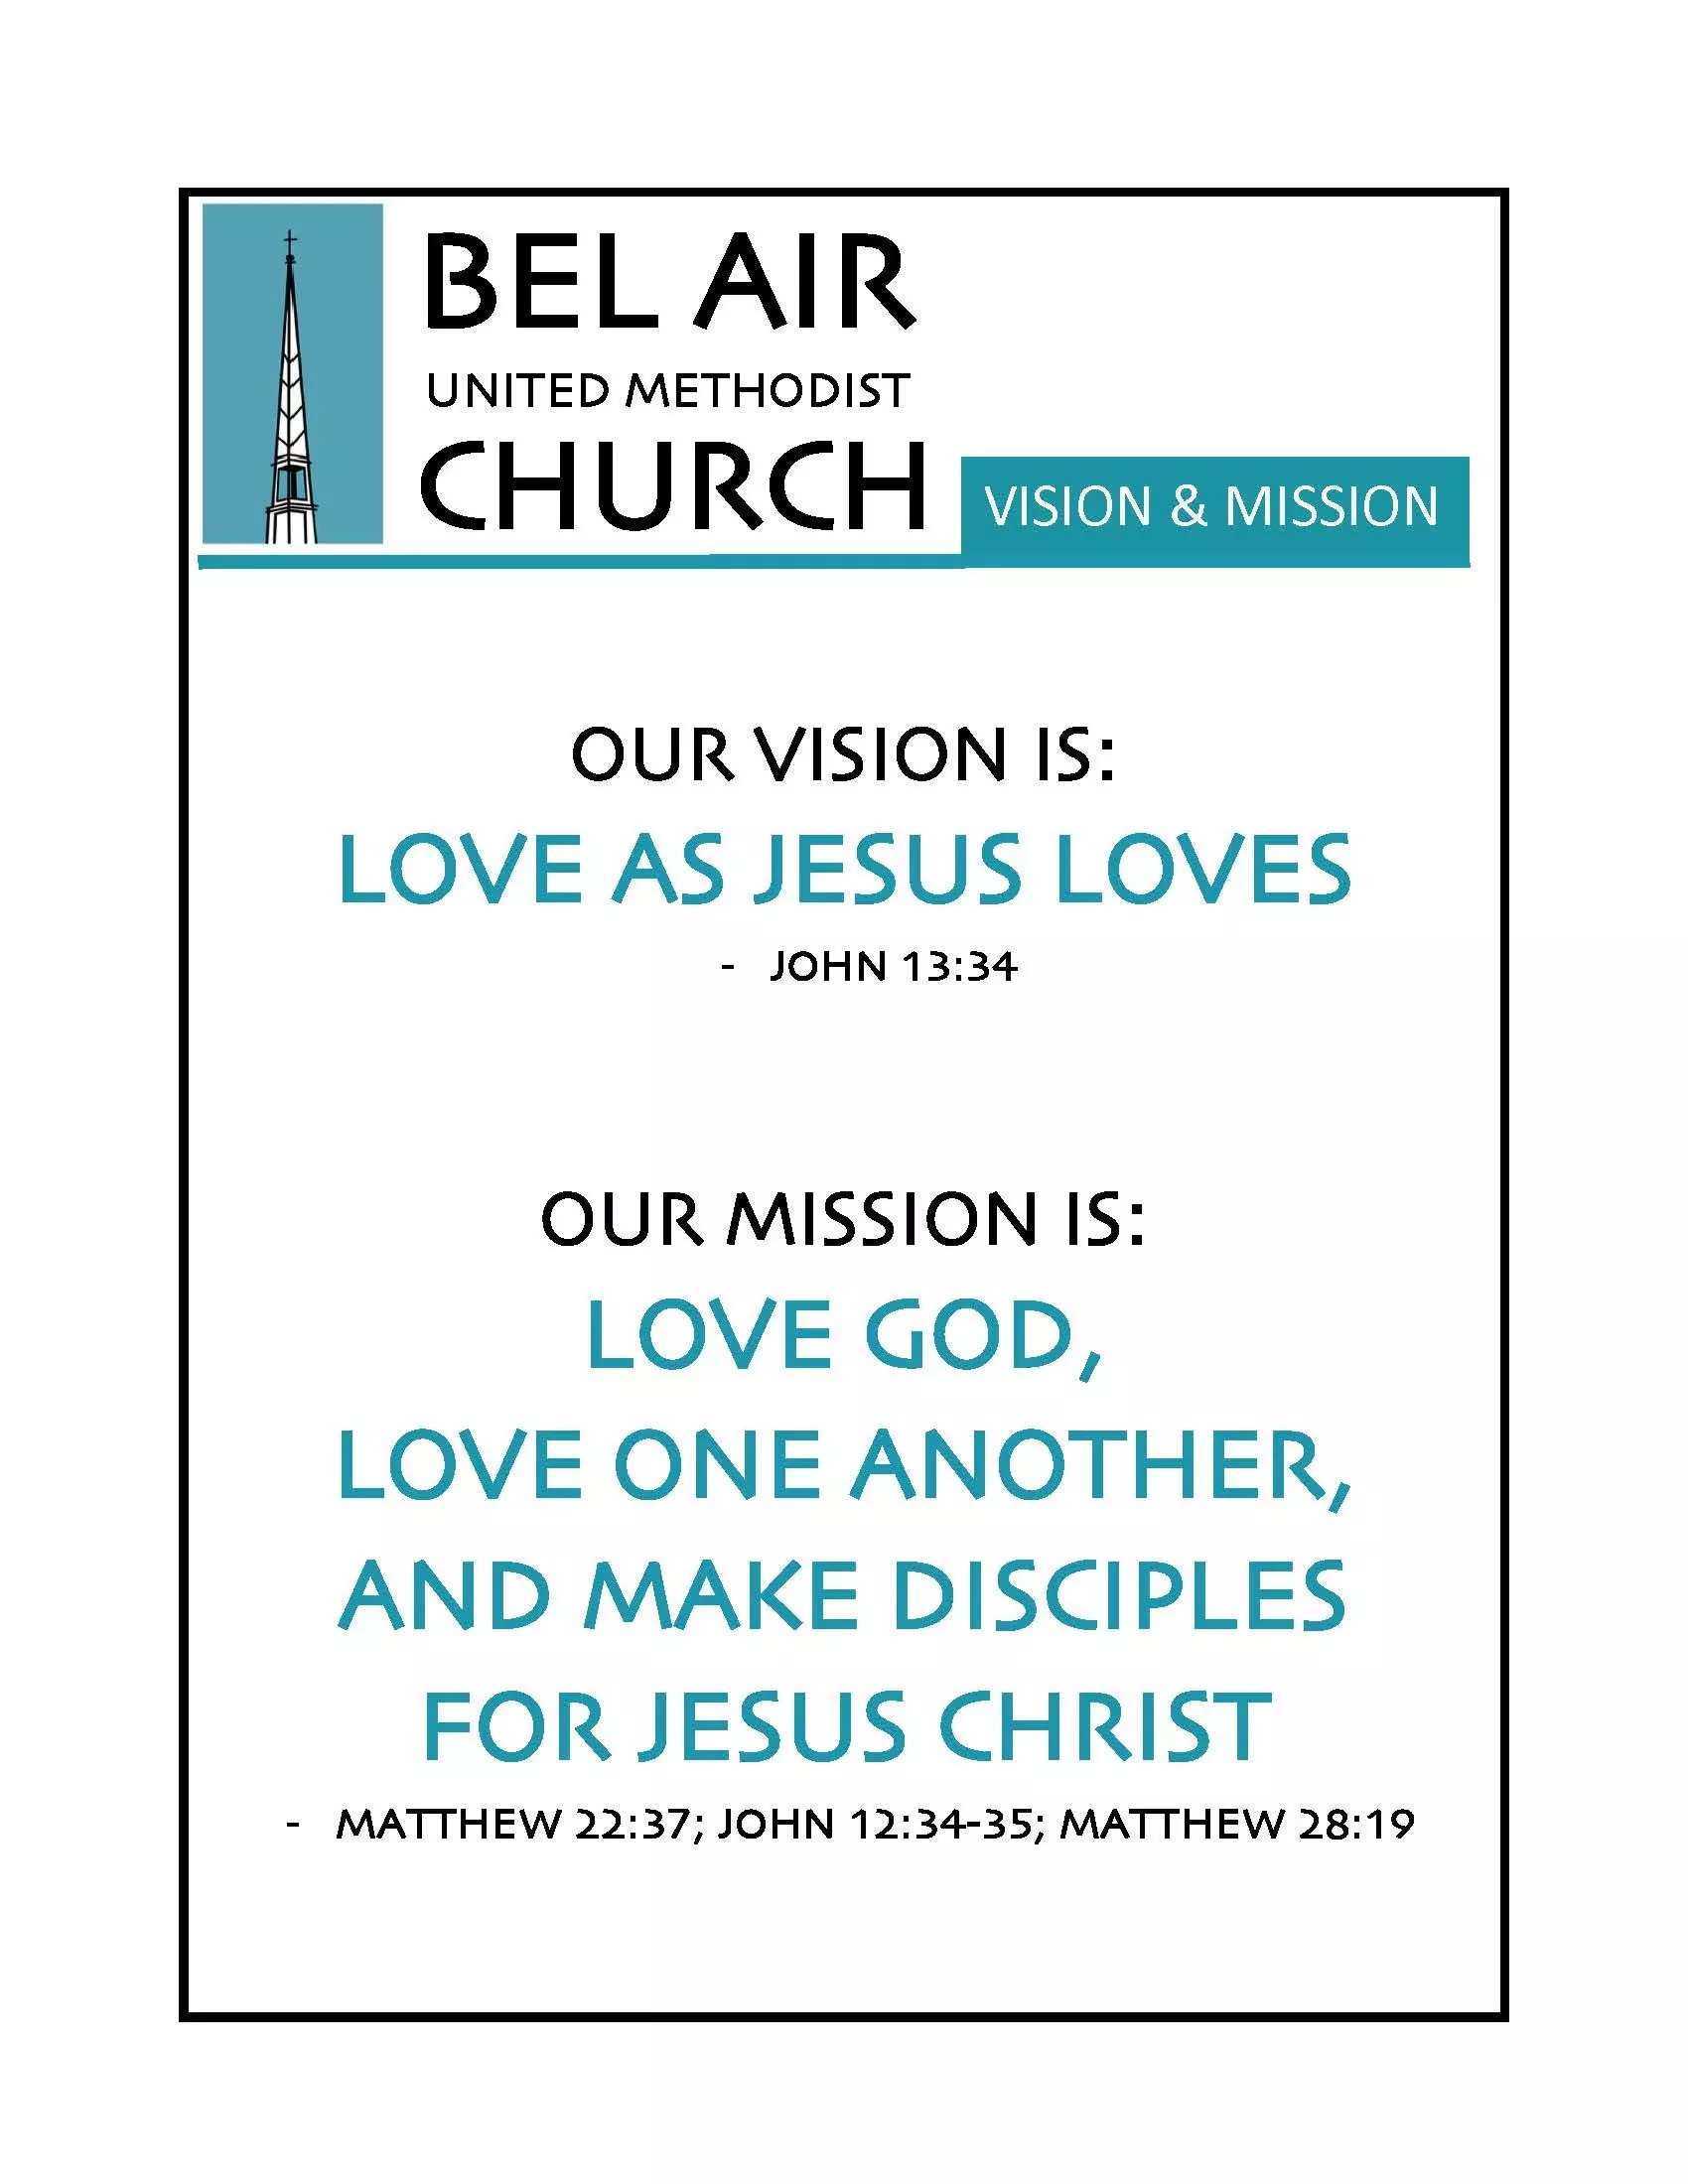 Bel Air United Methodist Church